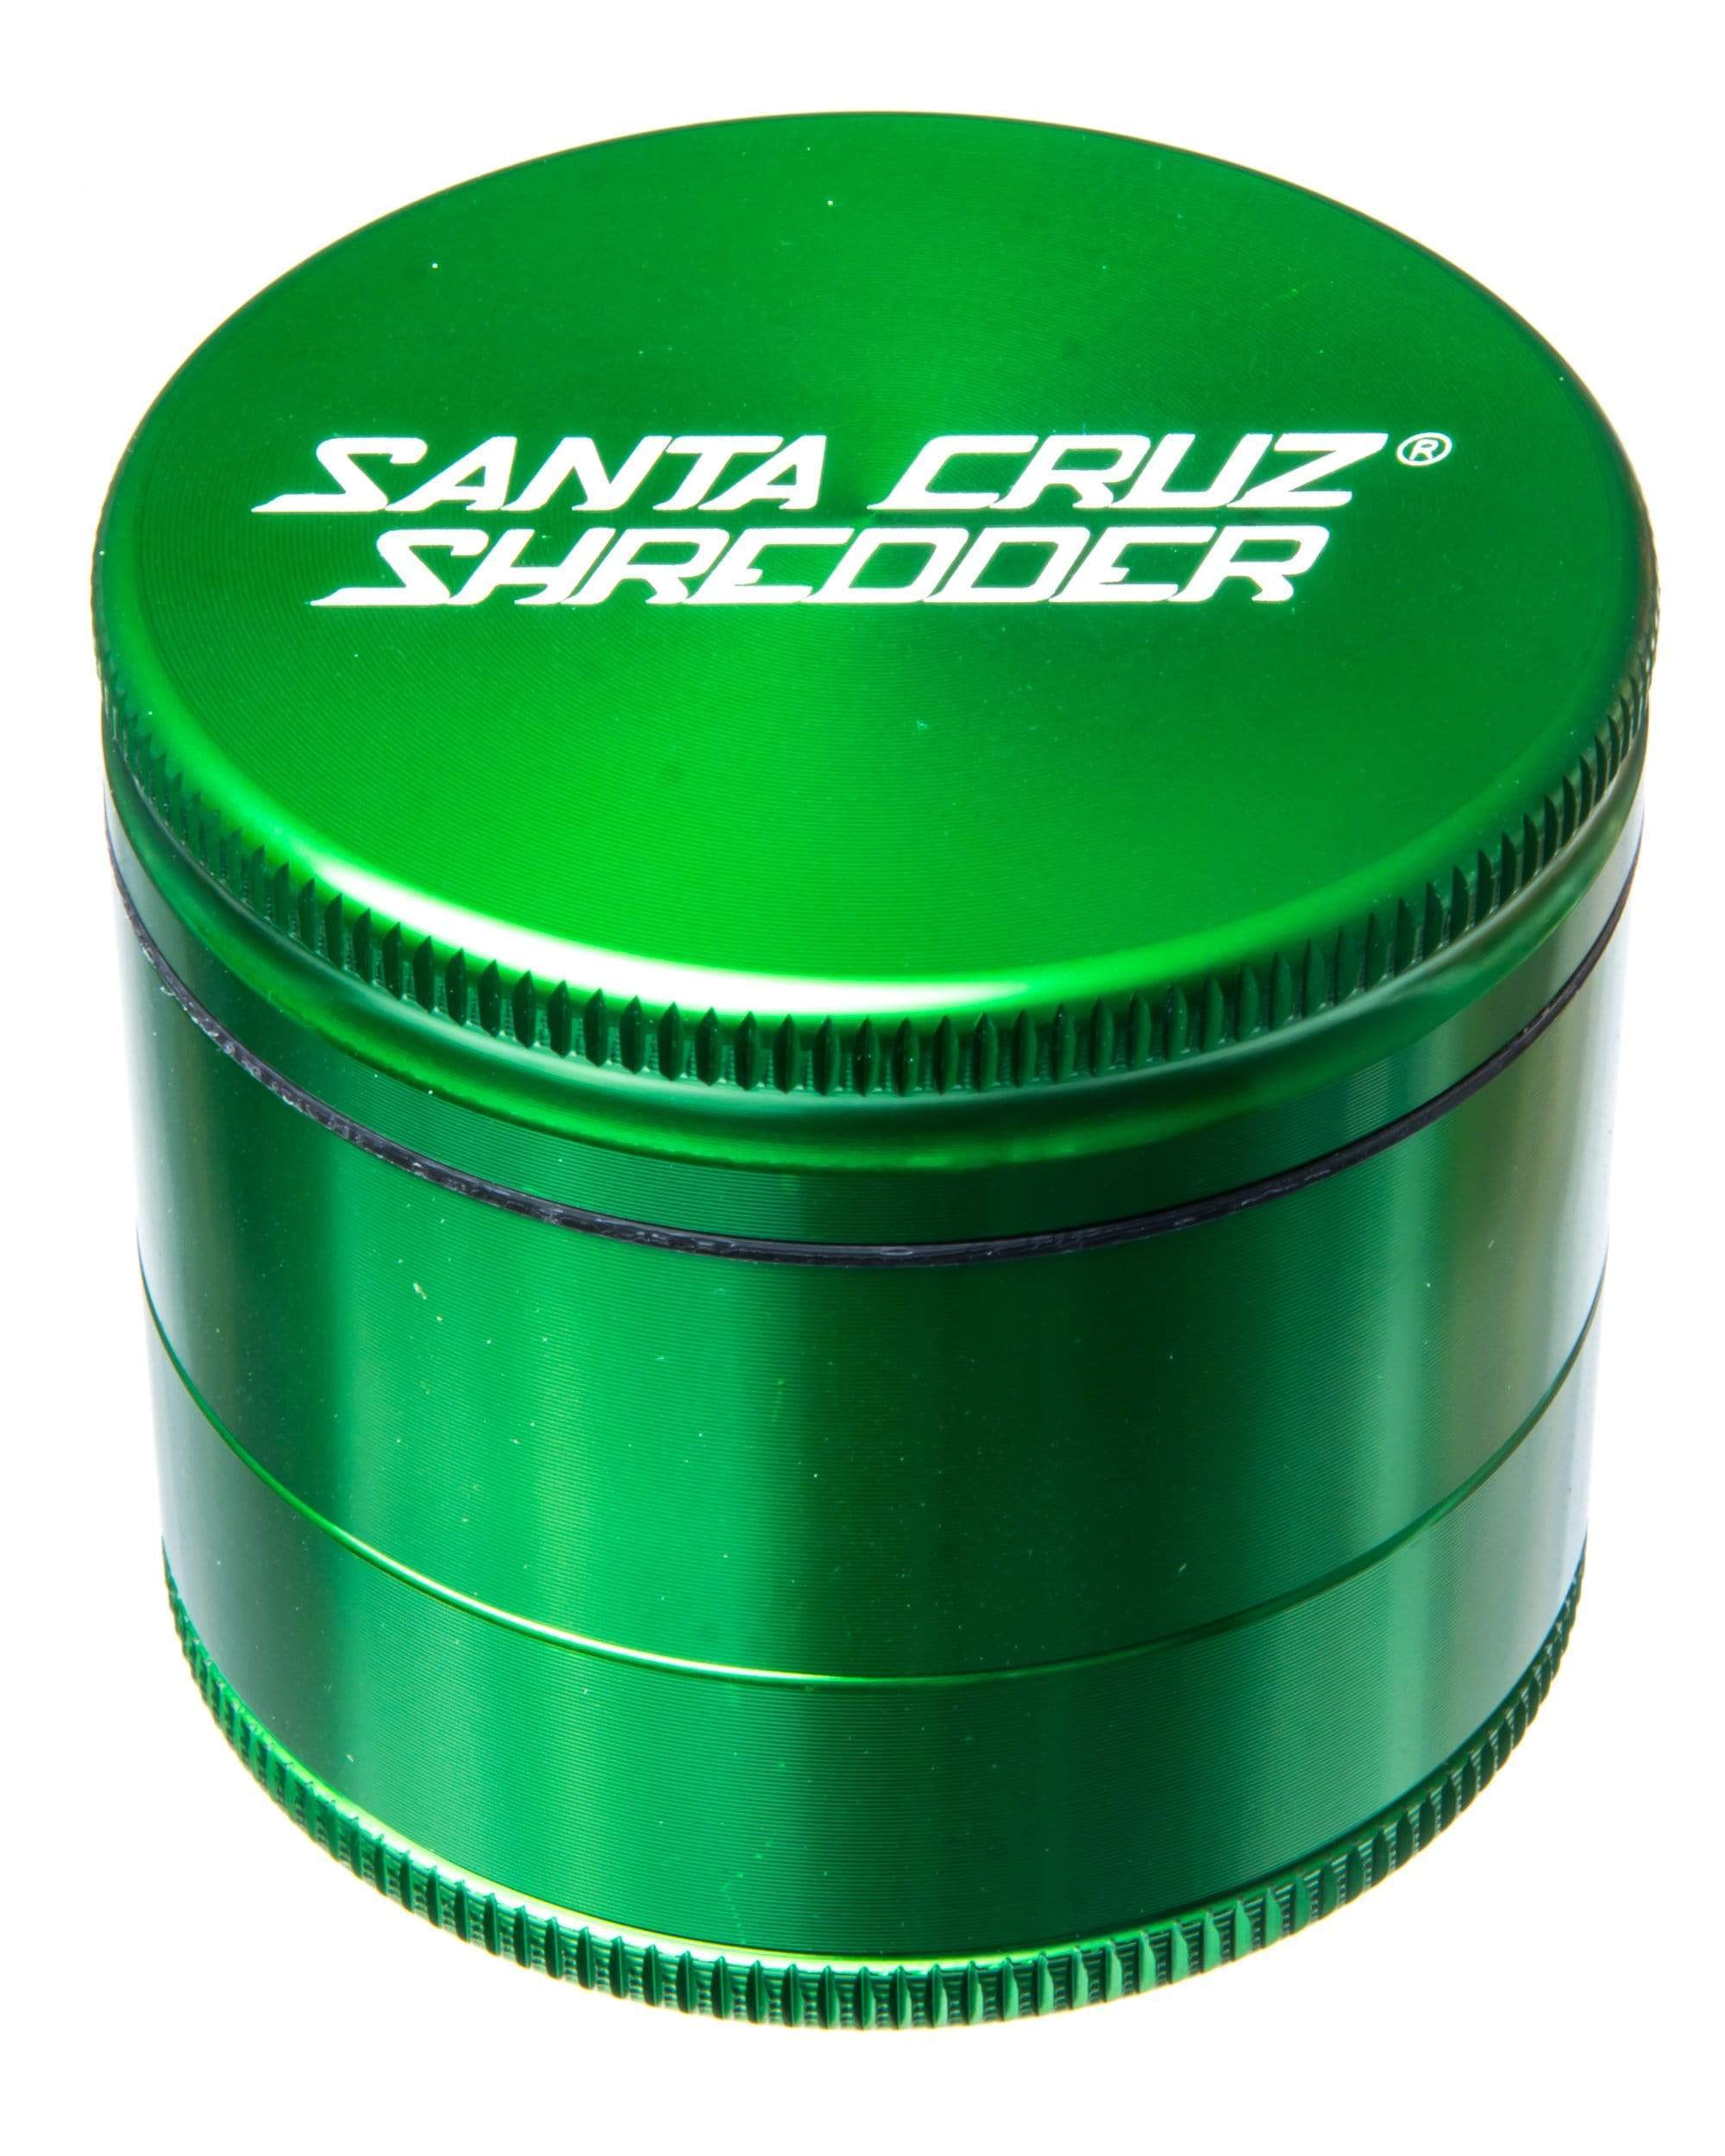 Santa Cruz Shredder Green Medium 3 Piece Herb Grinder grinder